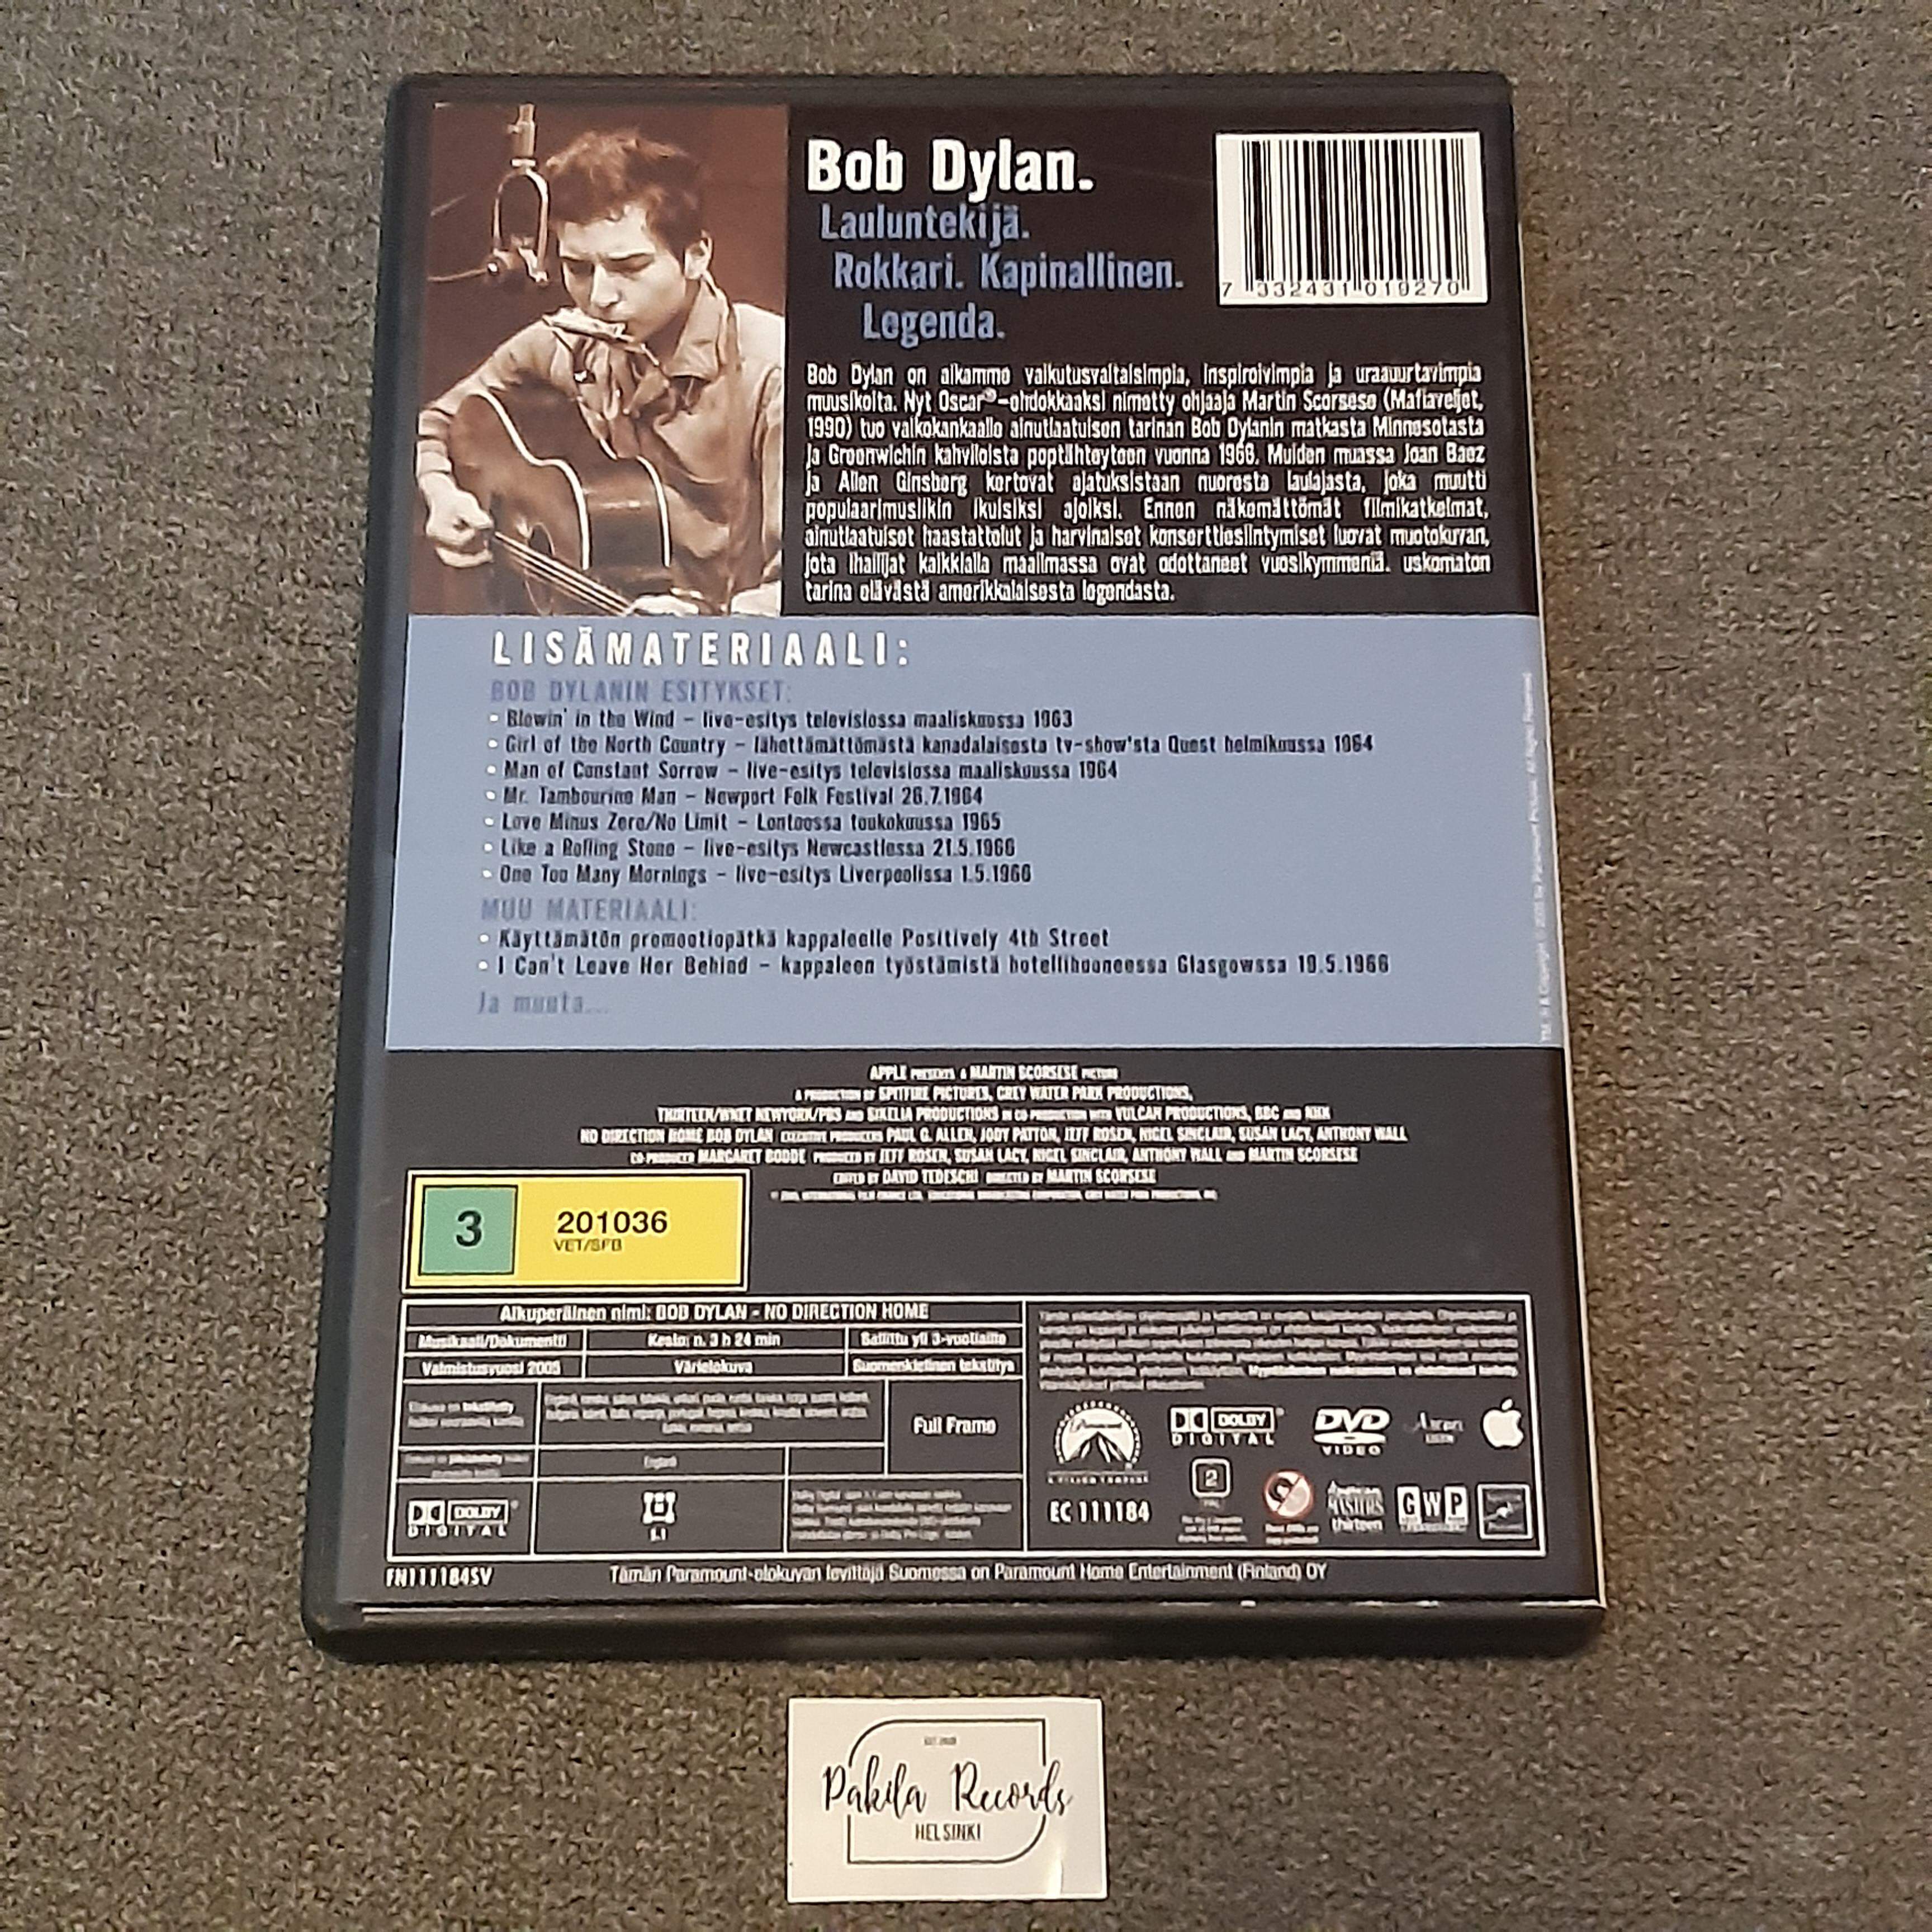 No Direction Home, Bob Dylan - 2 DVD (käytetty)